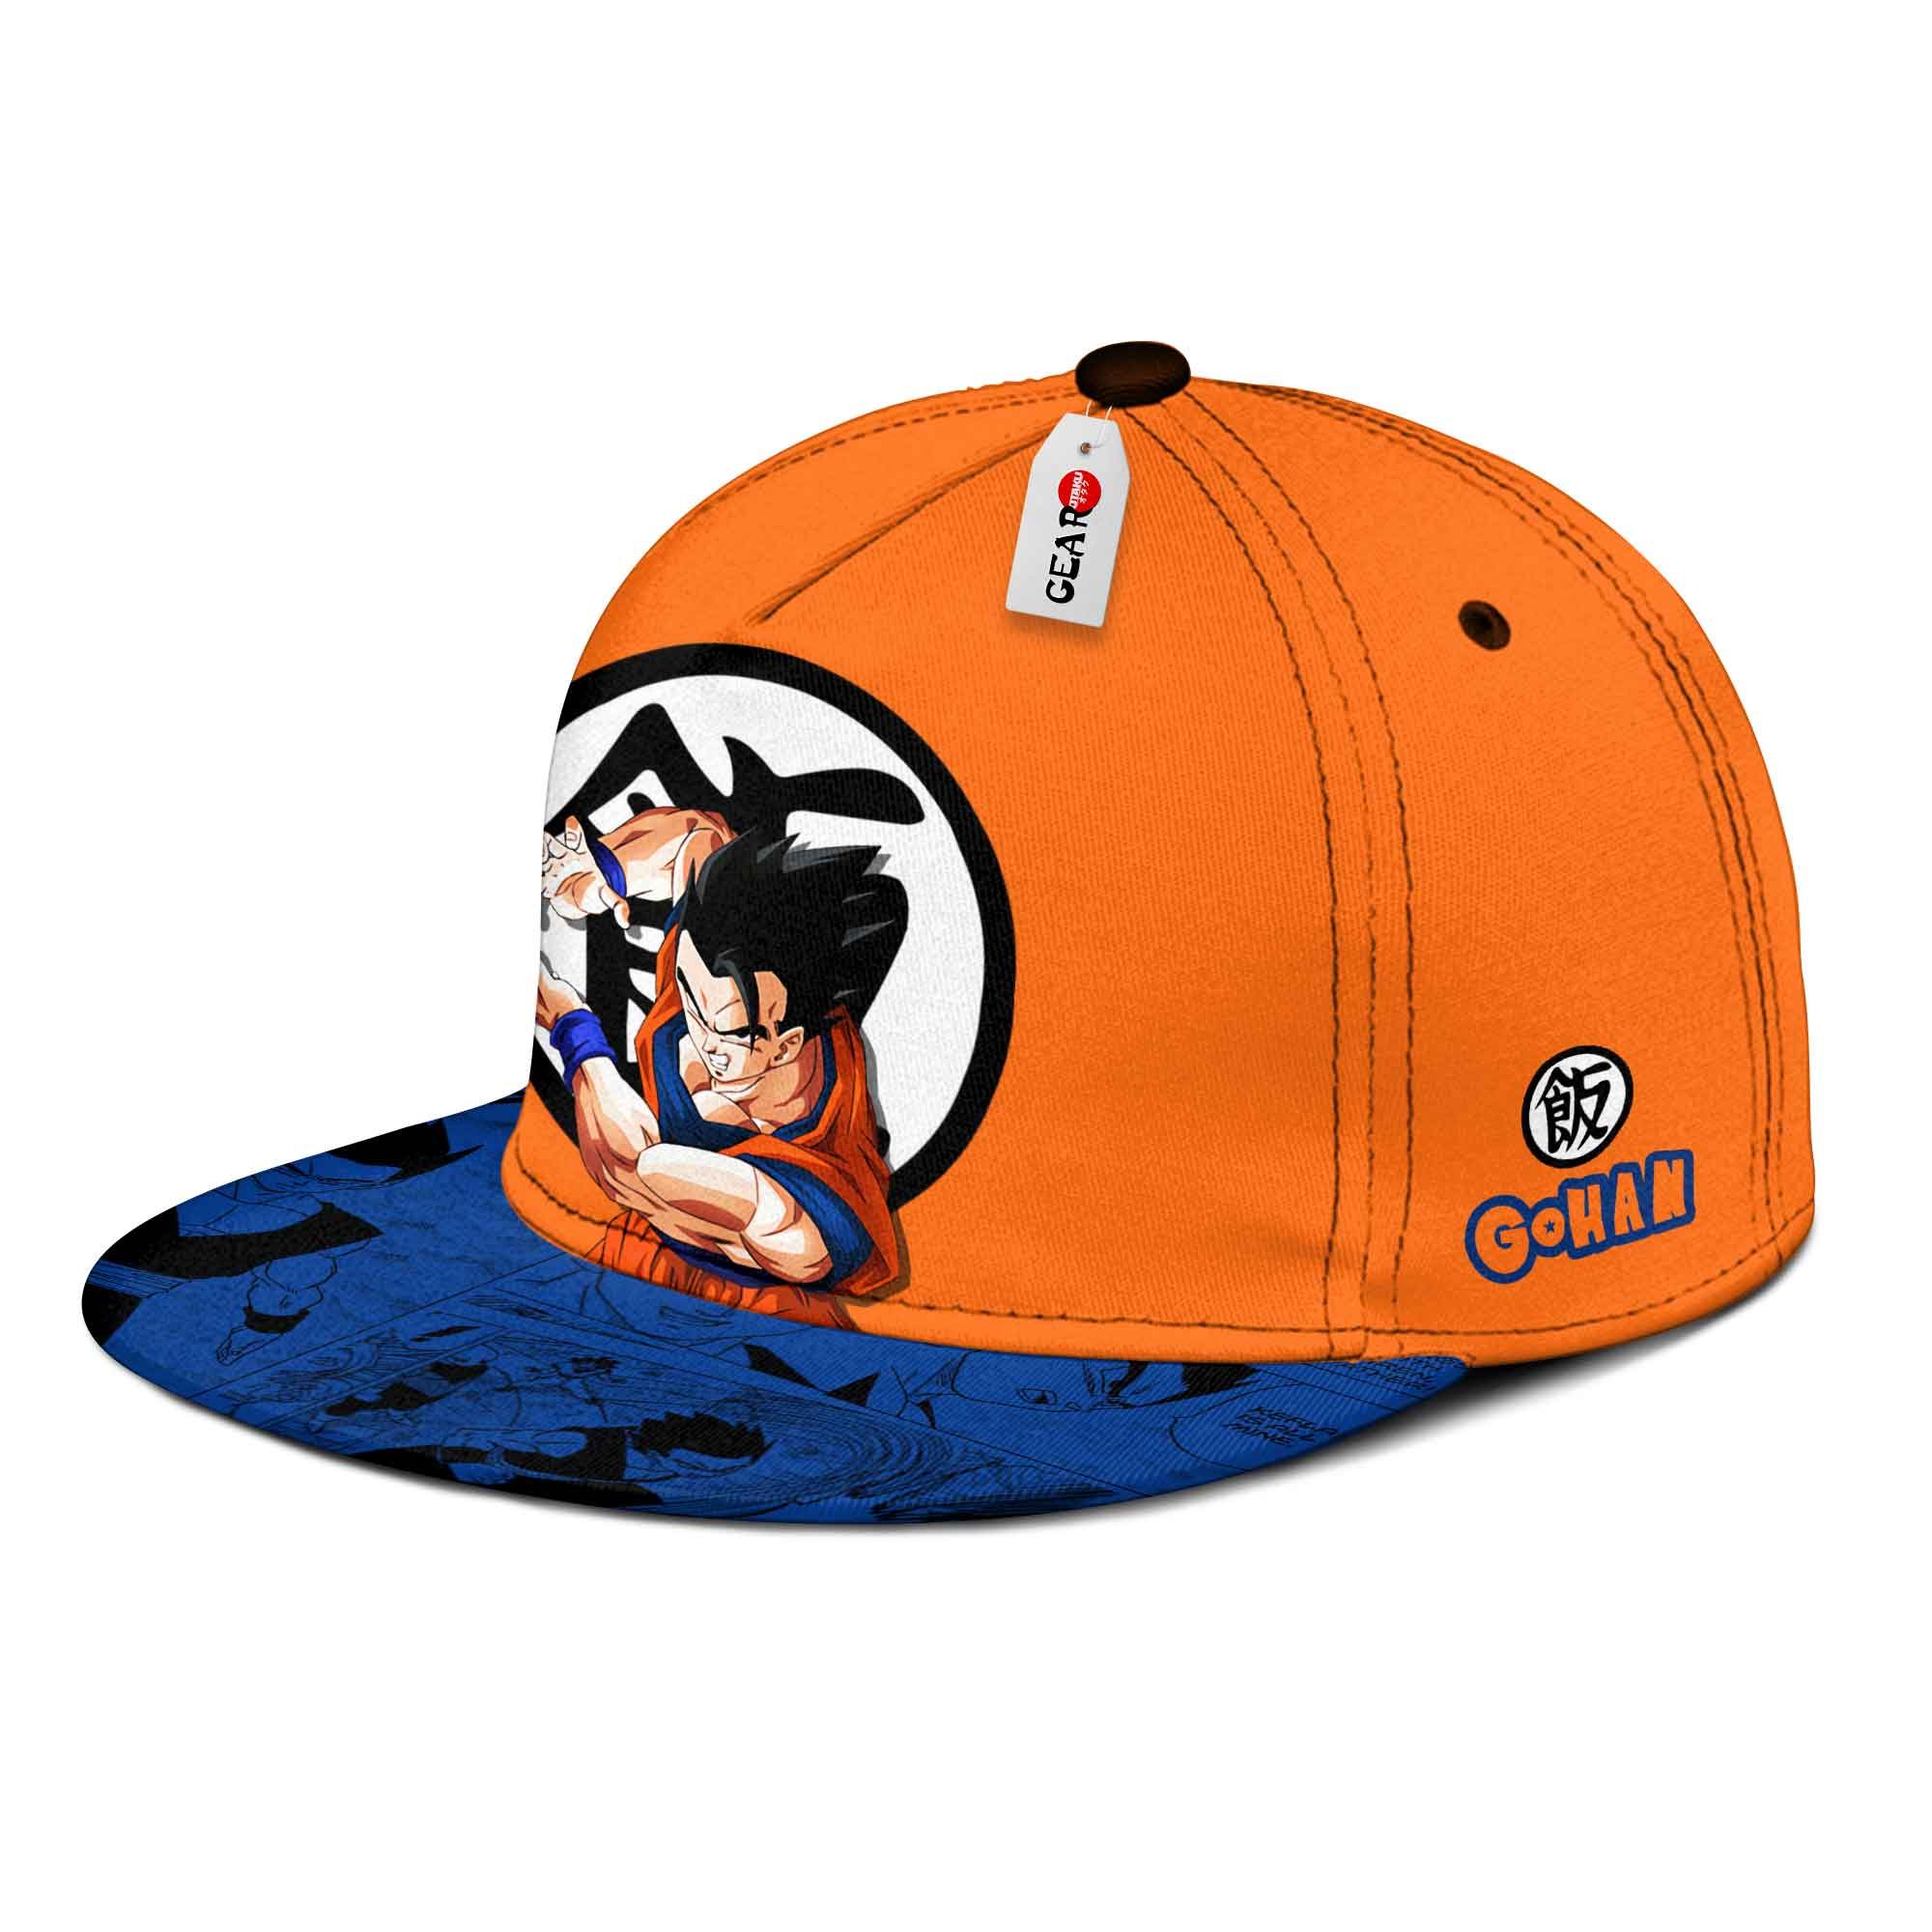 NEW Gohan Dragon Ball Cap hat2